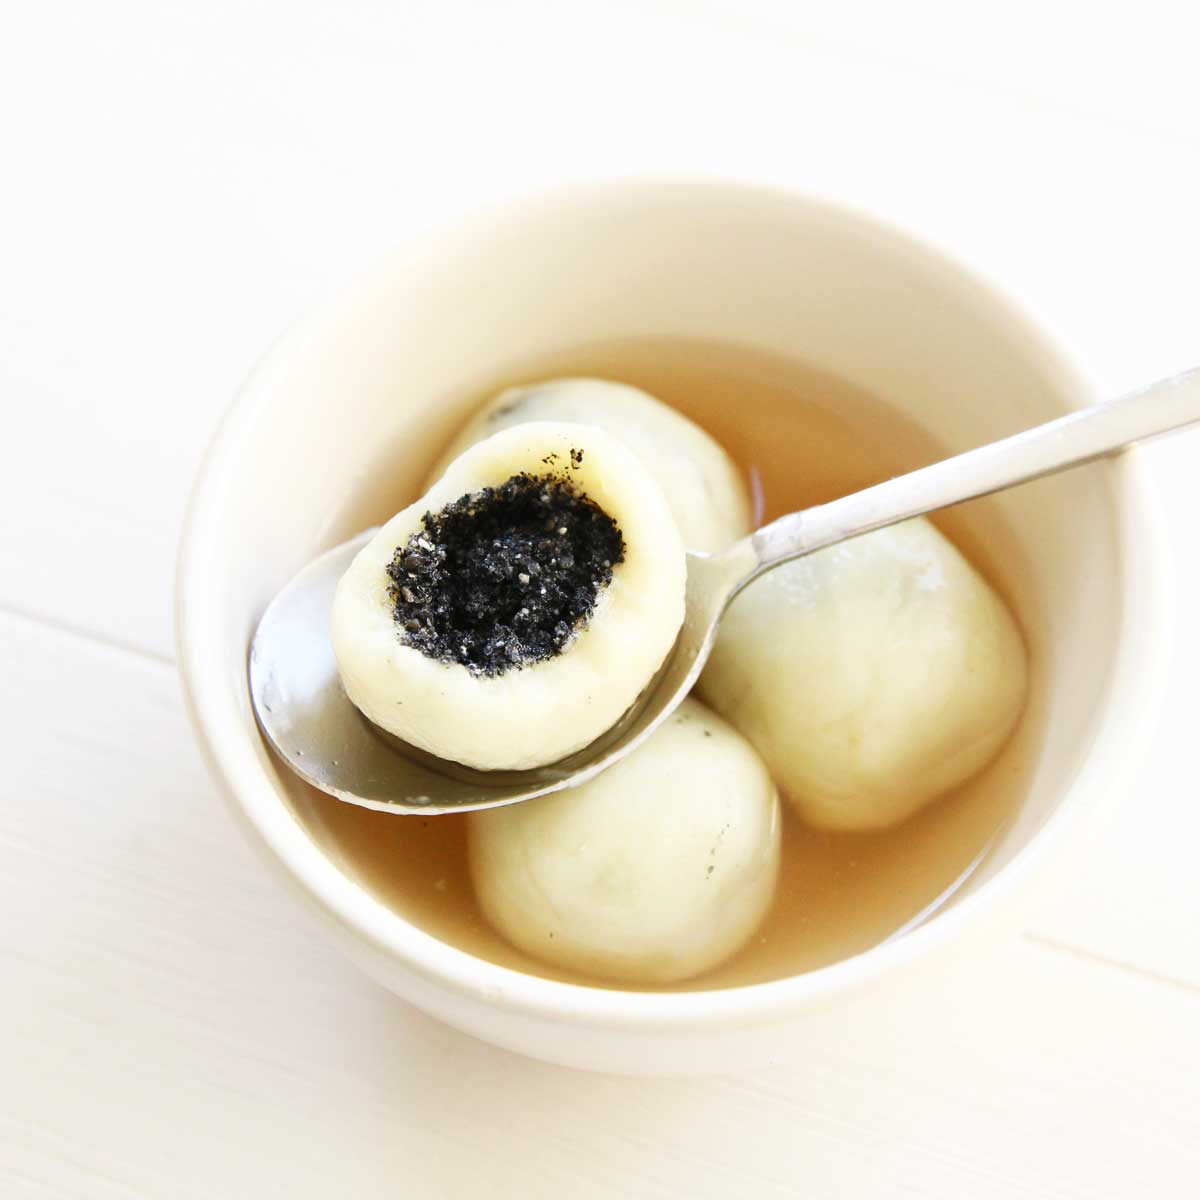 Healthy Sweet Potato Tang Yuan with Black Sesame Filling - Walnut Butter Glaze